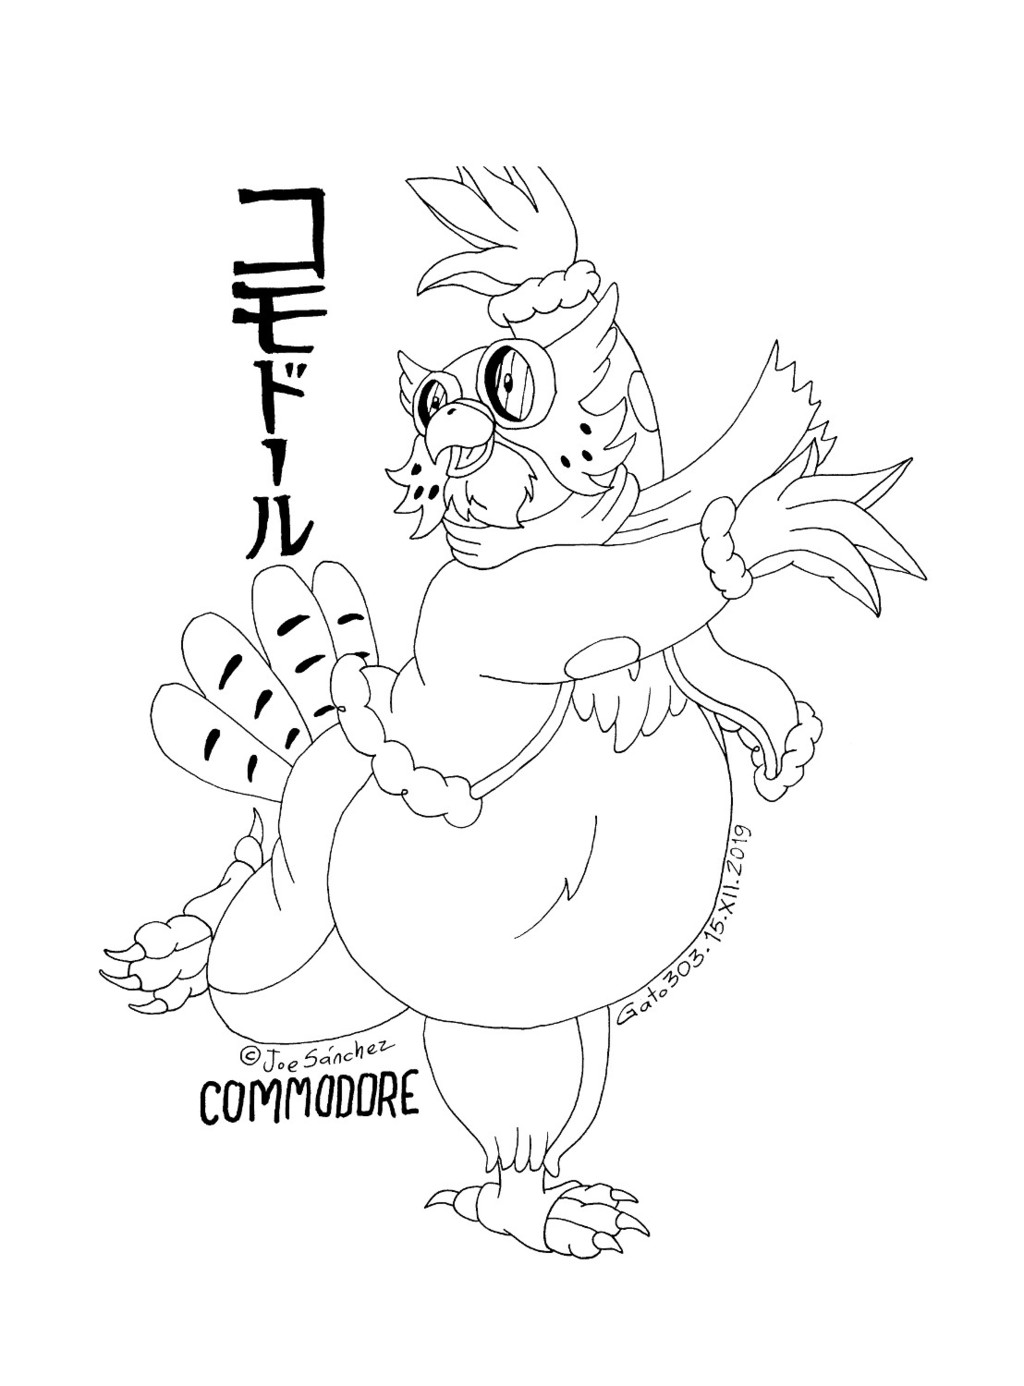 Commodore the Owl